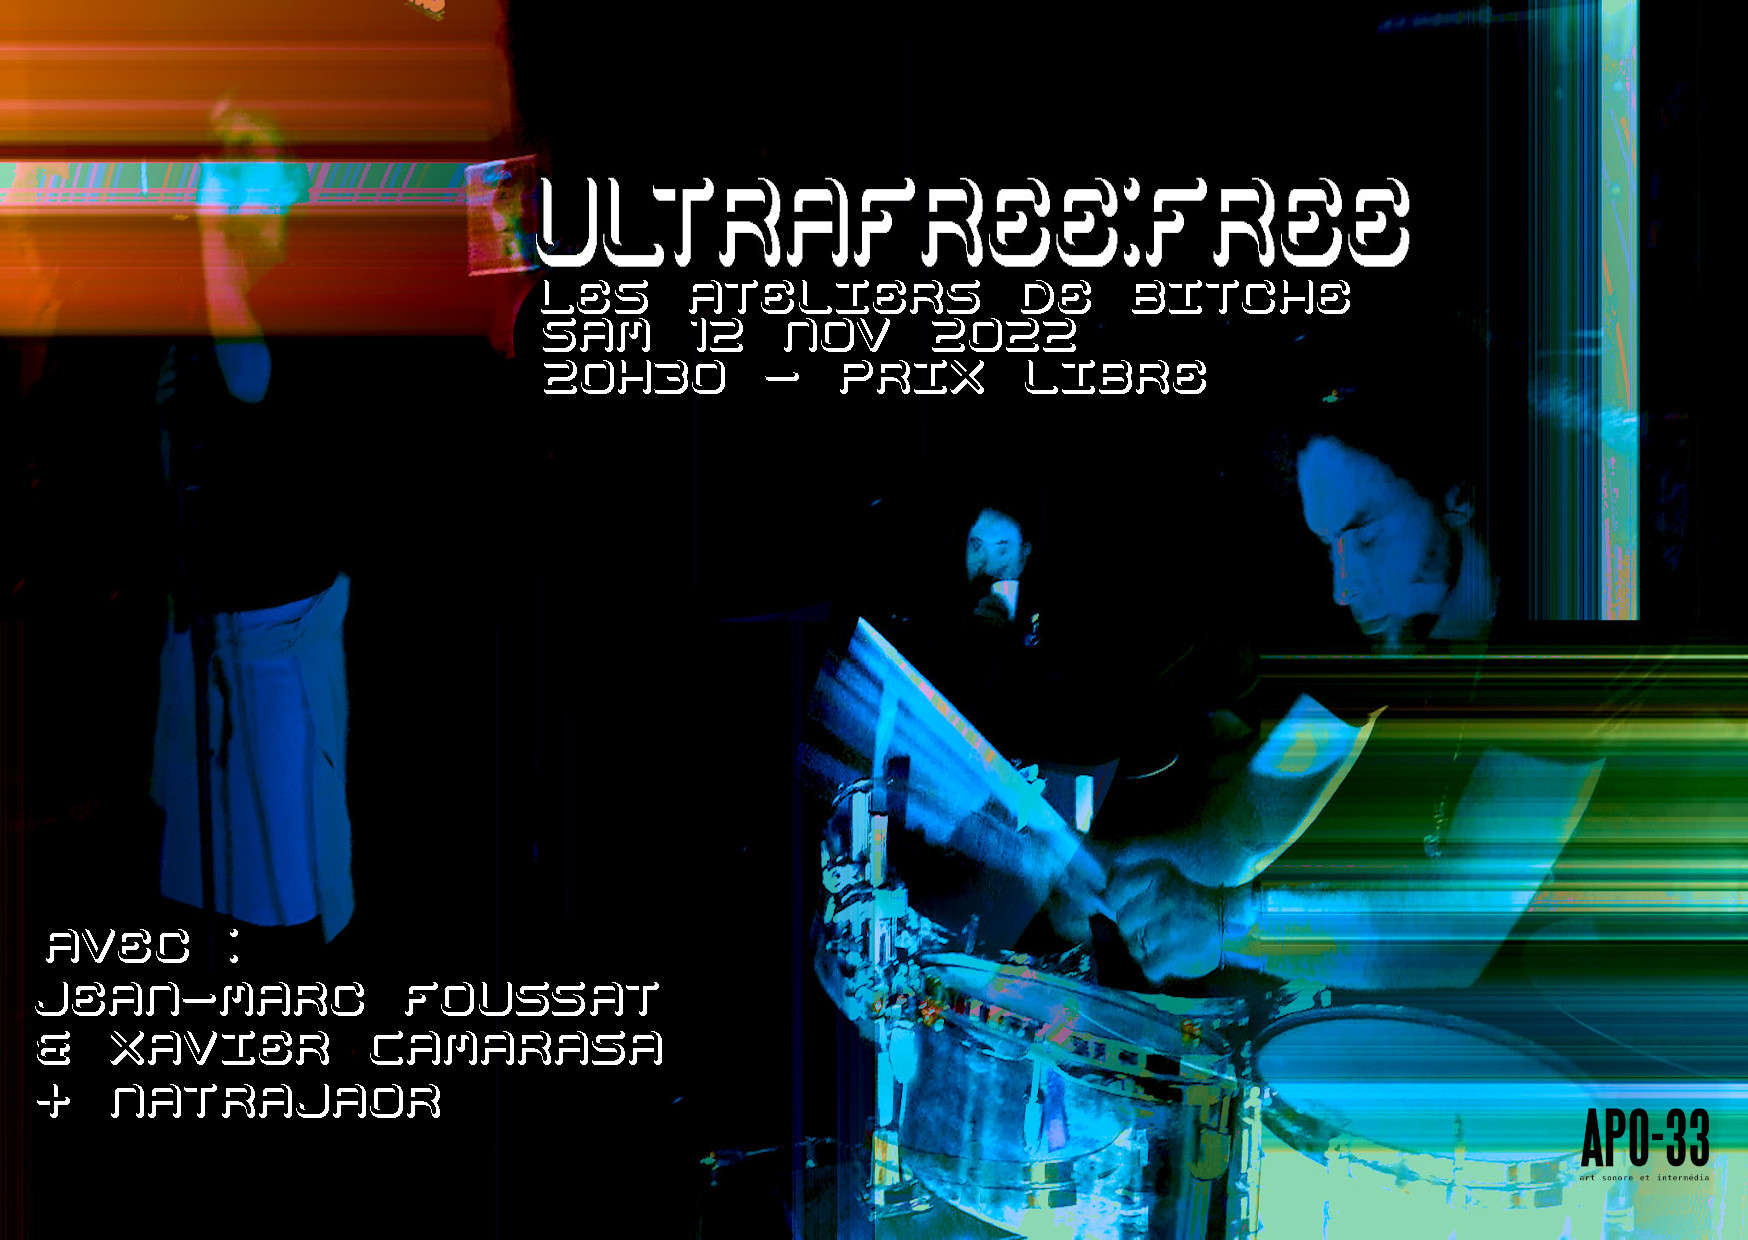 UltraFree:Free – Jean Marc Foussat & Xavier Camarasa + Natrajaor – Sam 12 Nov